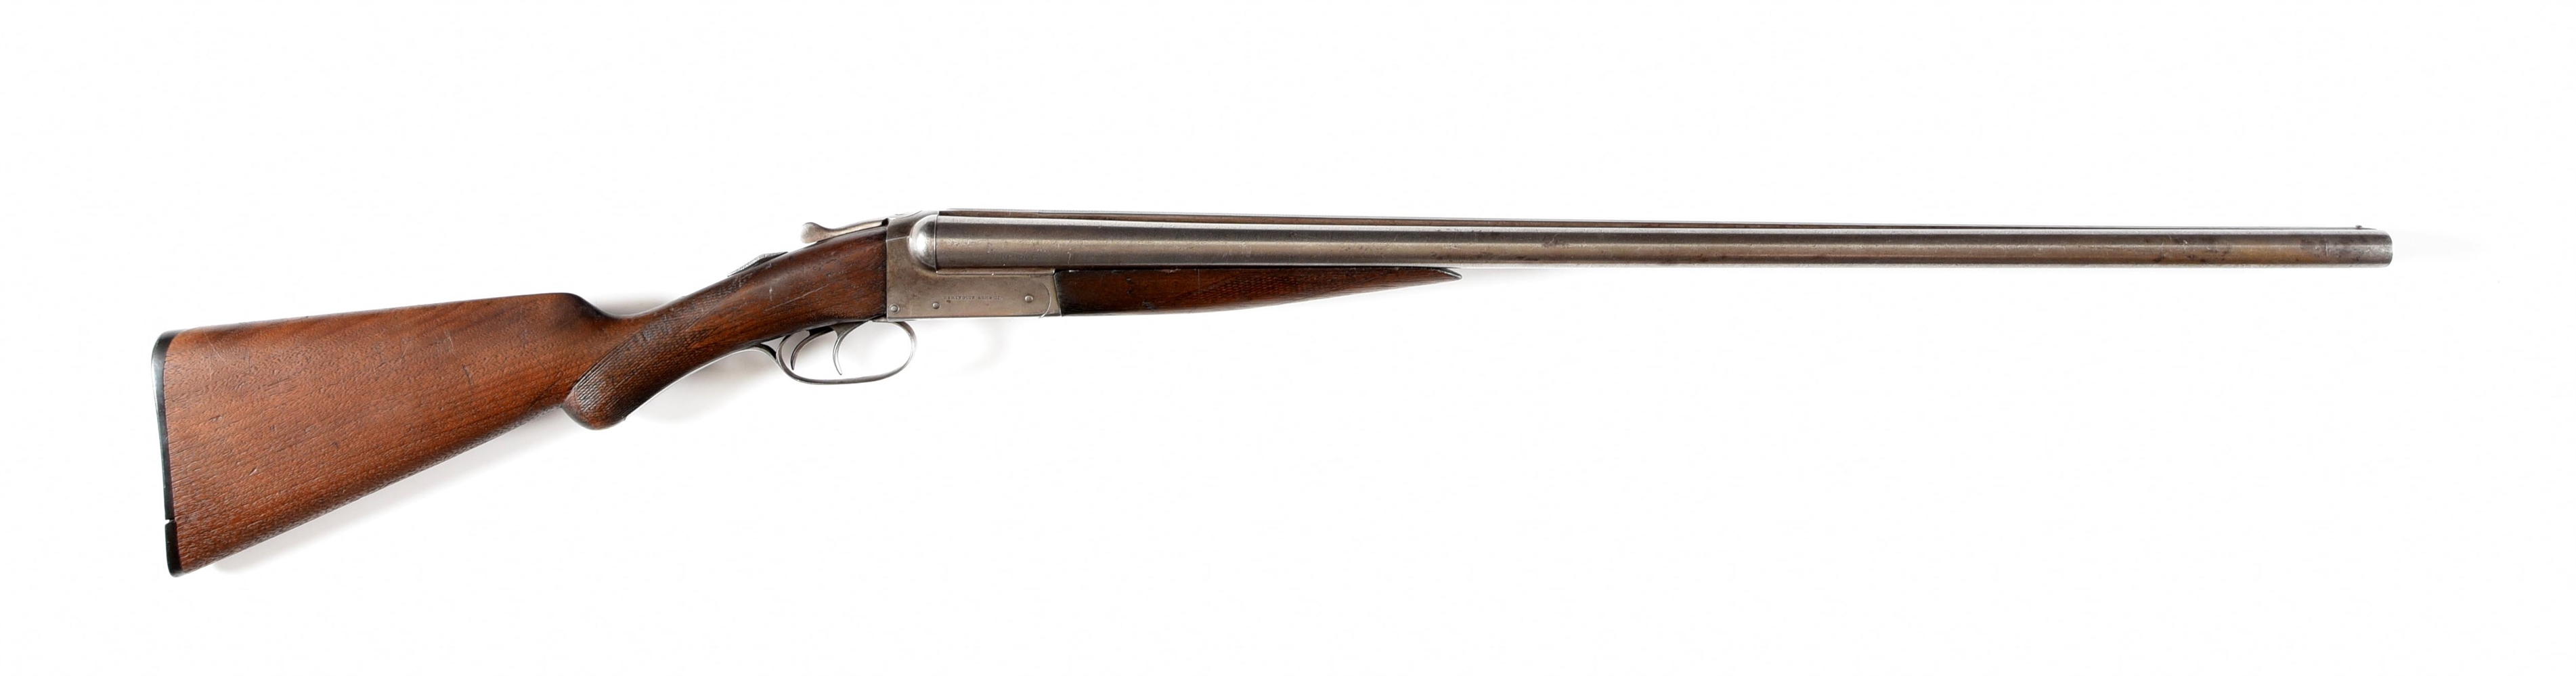 (C) REMINGTON MODEL 1900 HAMMERLESS SIDE BY SIDE SHOTGUN